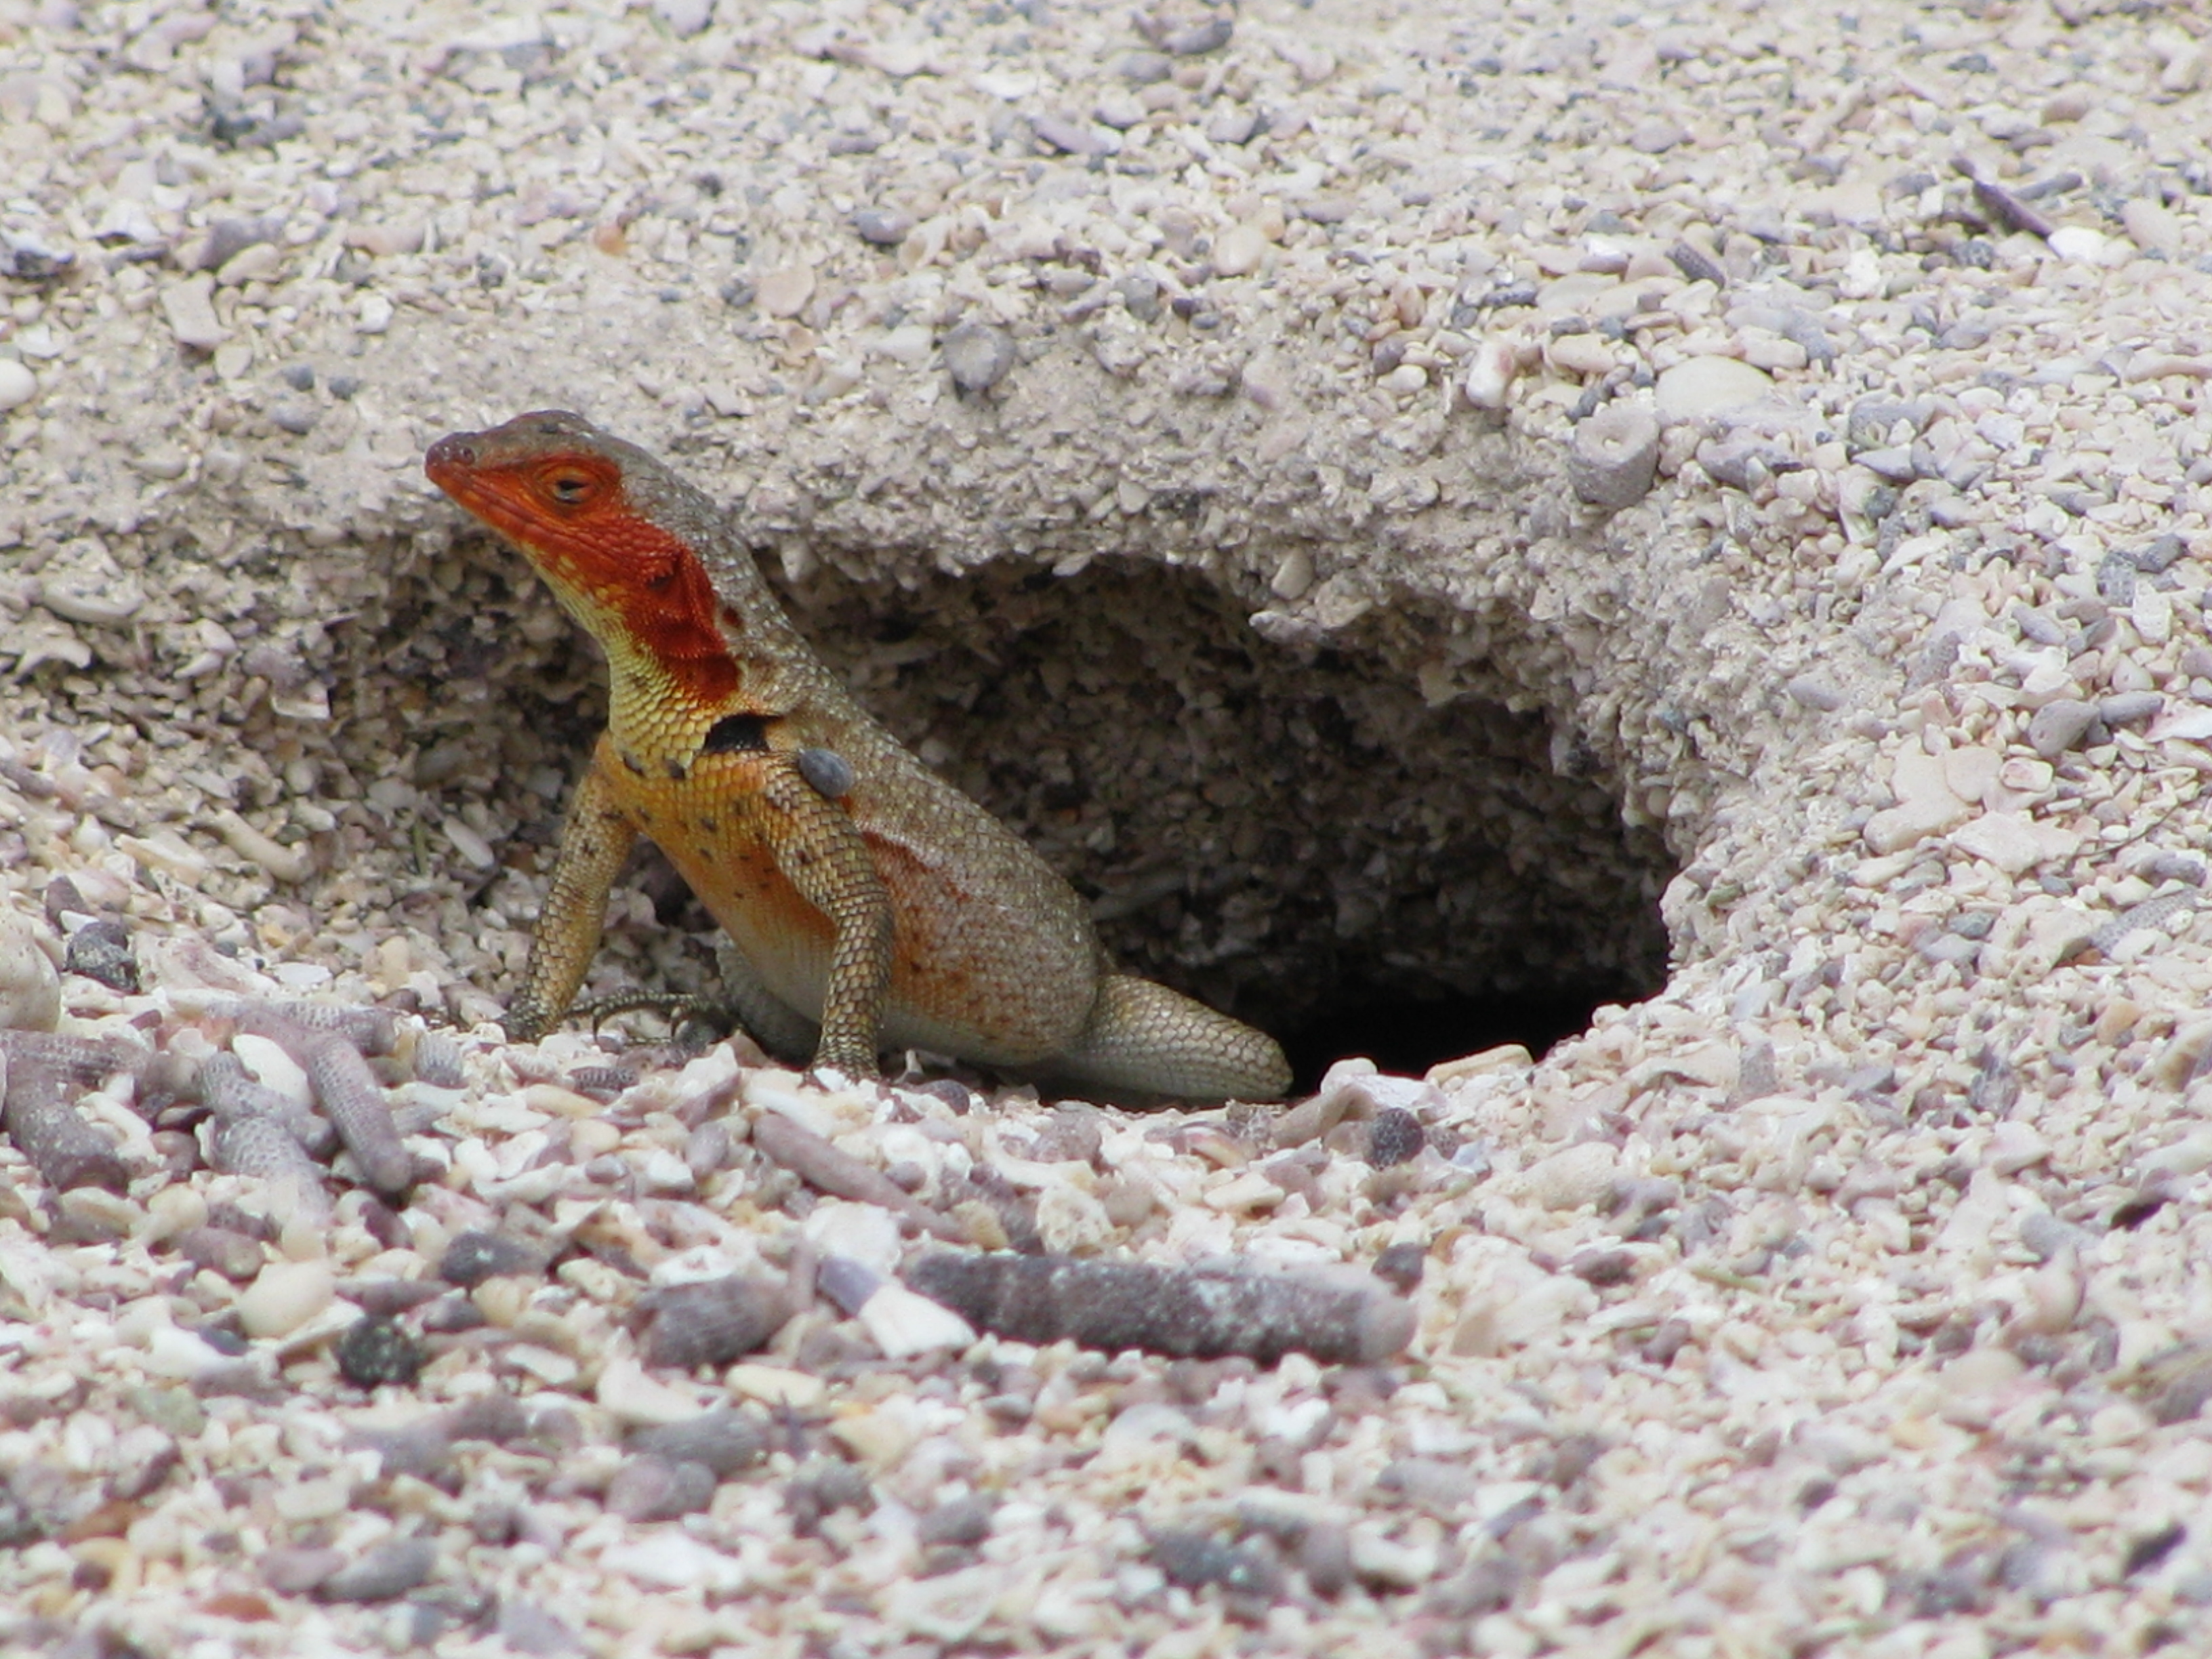 lizard in a hole